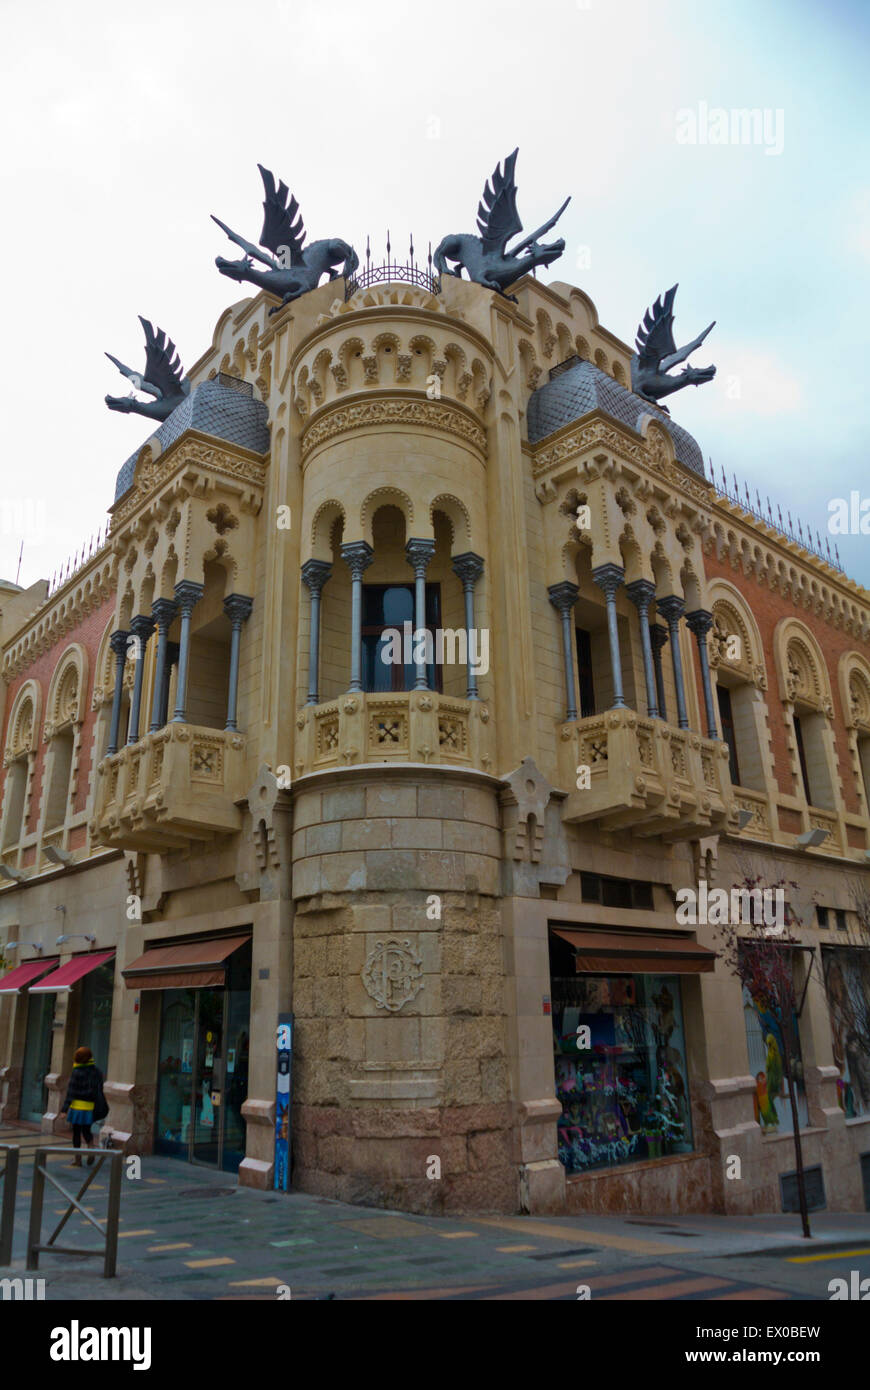 Casa de los Dragones, House of Dragons, Plaza de los Reyes, main square, Ceuta, Spanish enclave inside Morocco, northern Africa Stock Photo